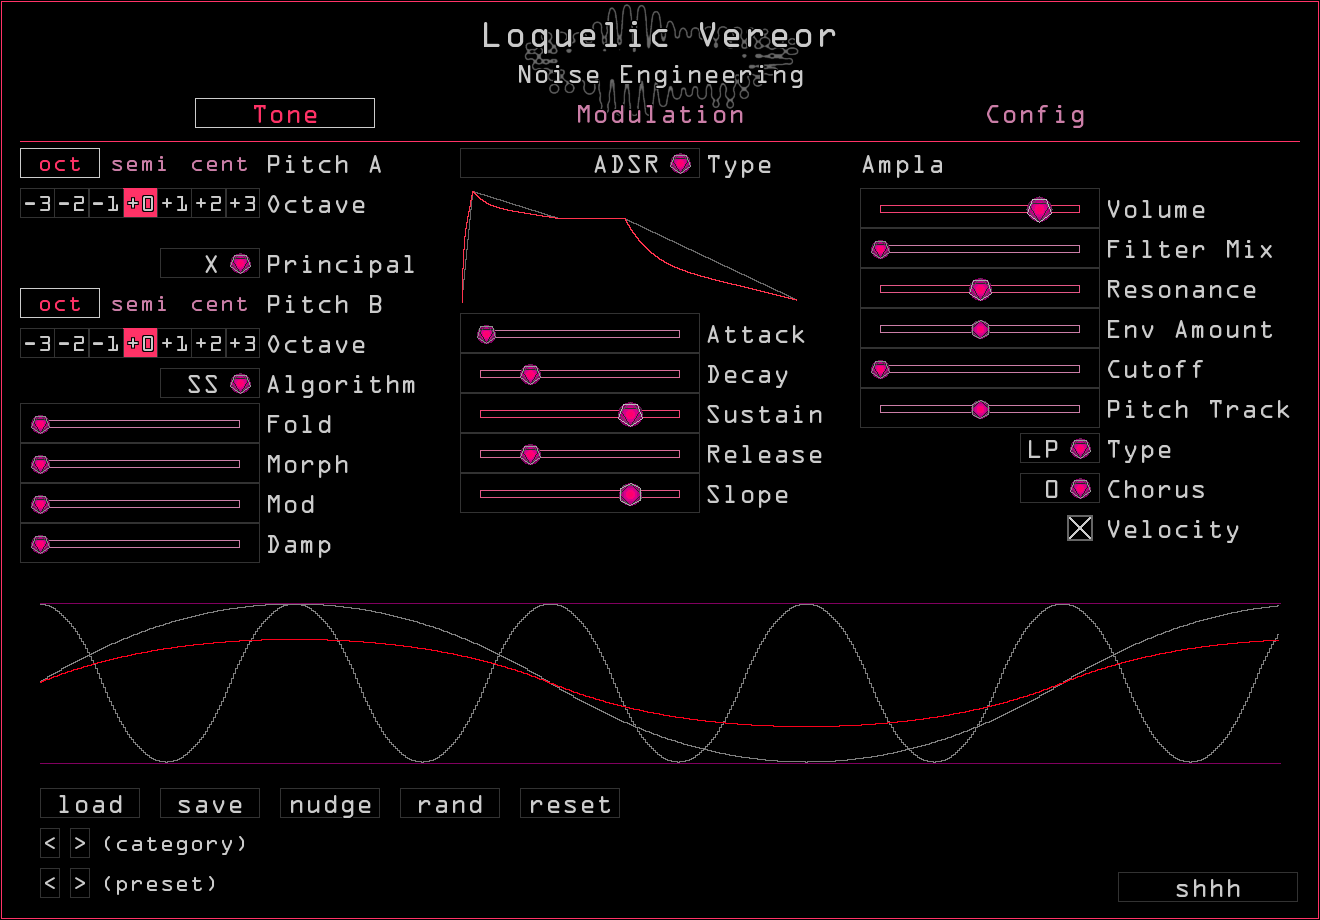 Loquelic Vereor's interface